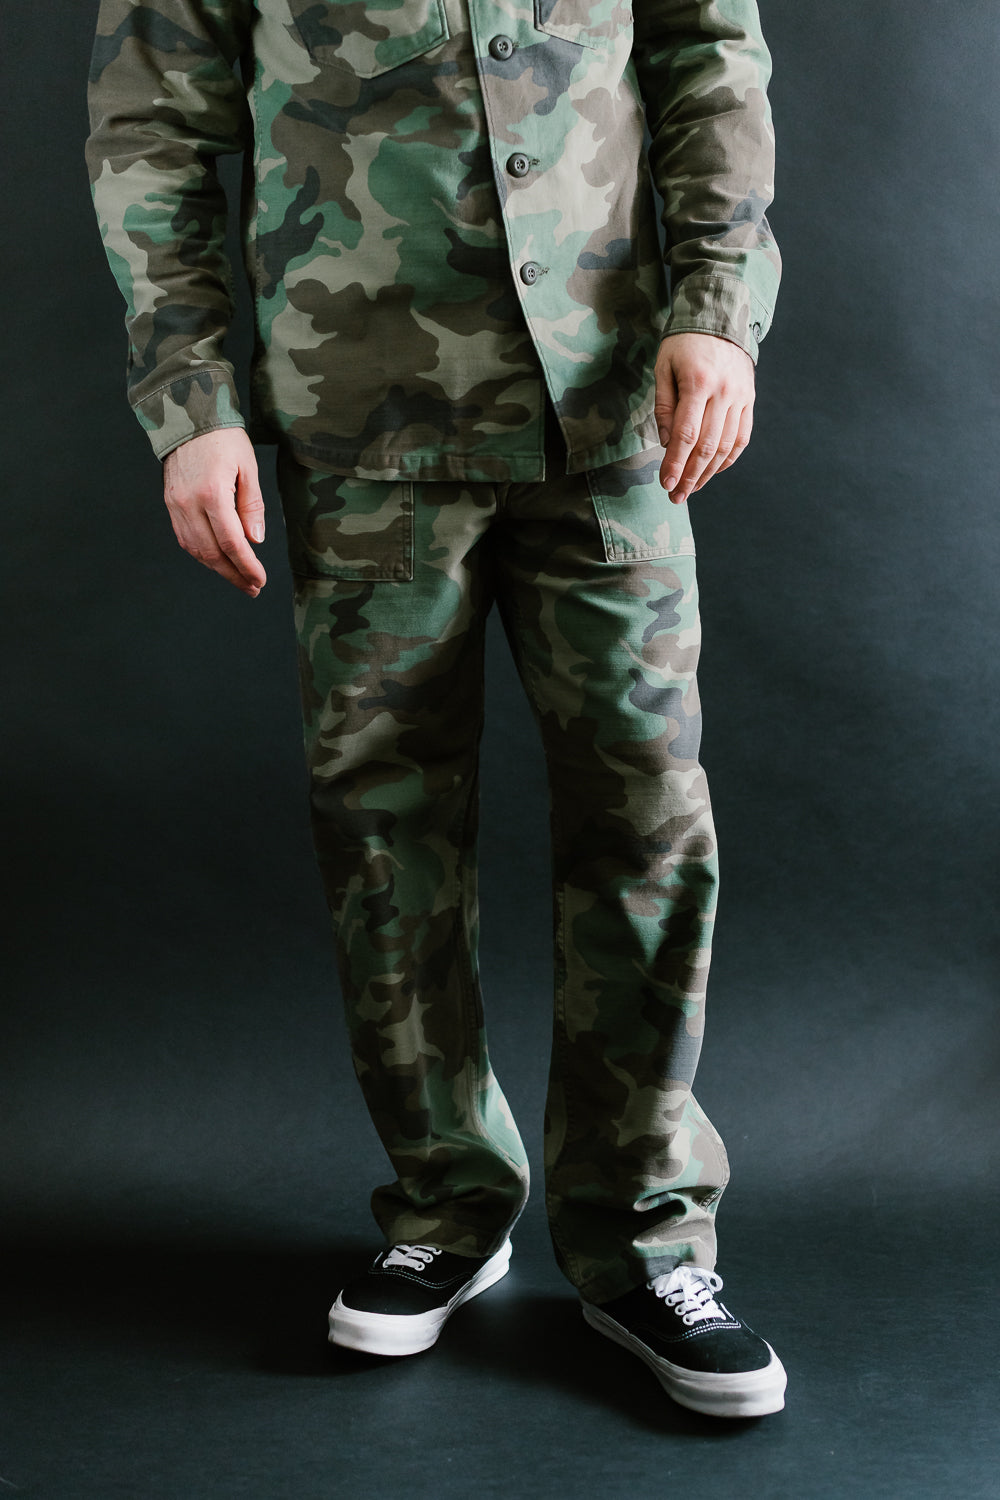 Woodland Digital Camo Army Combat Uniform Pants